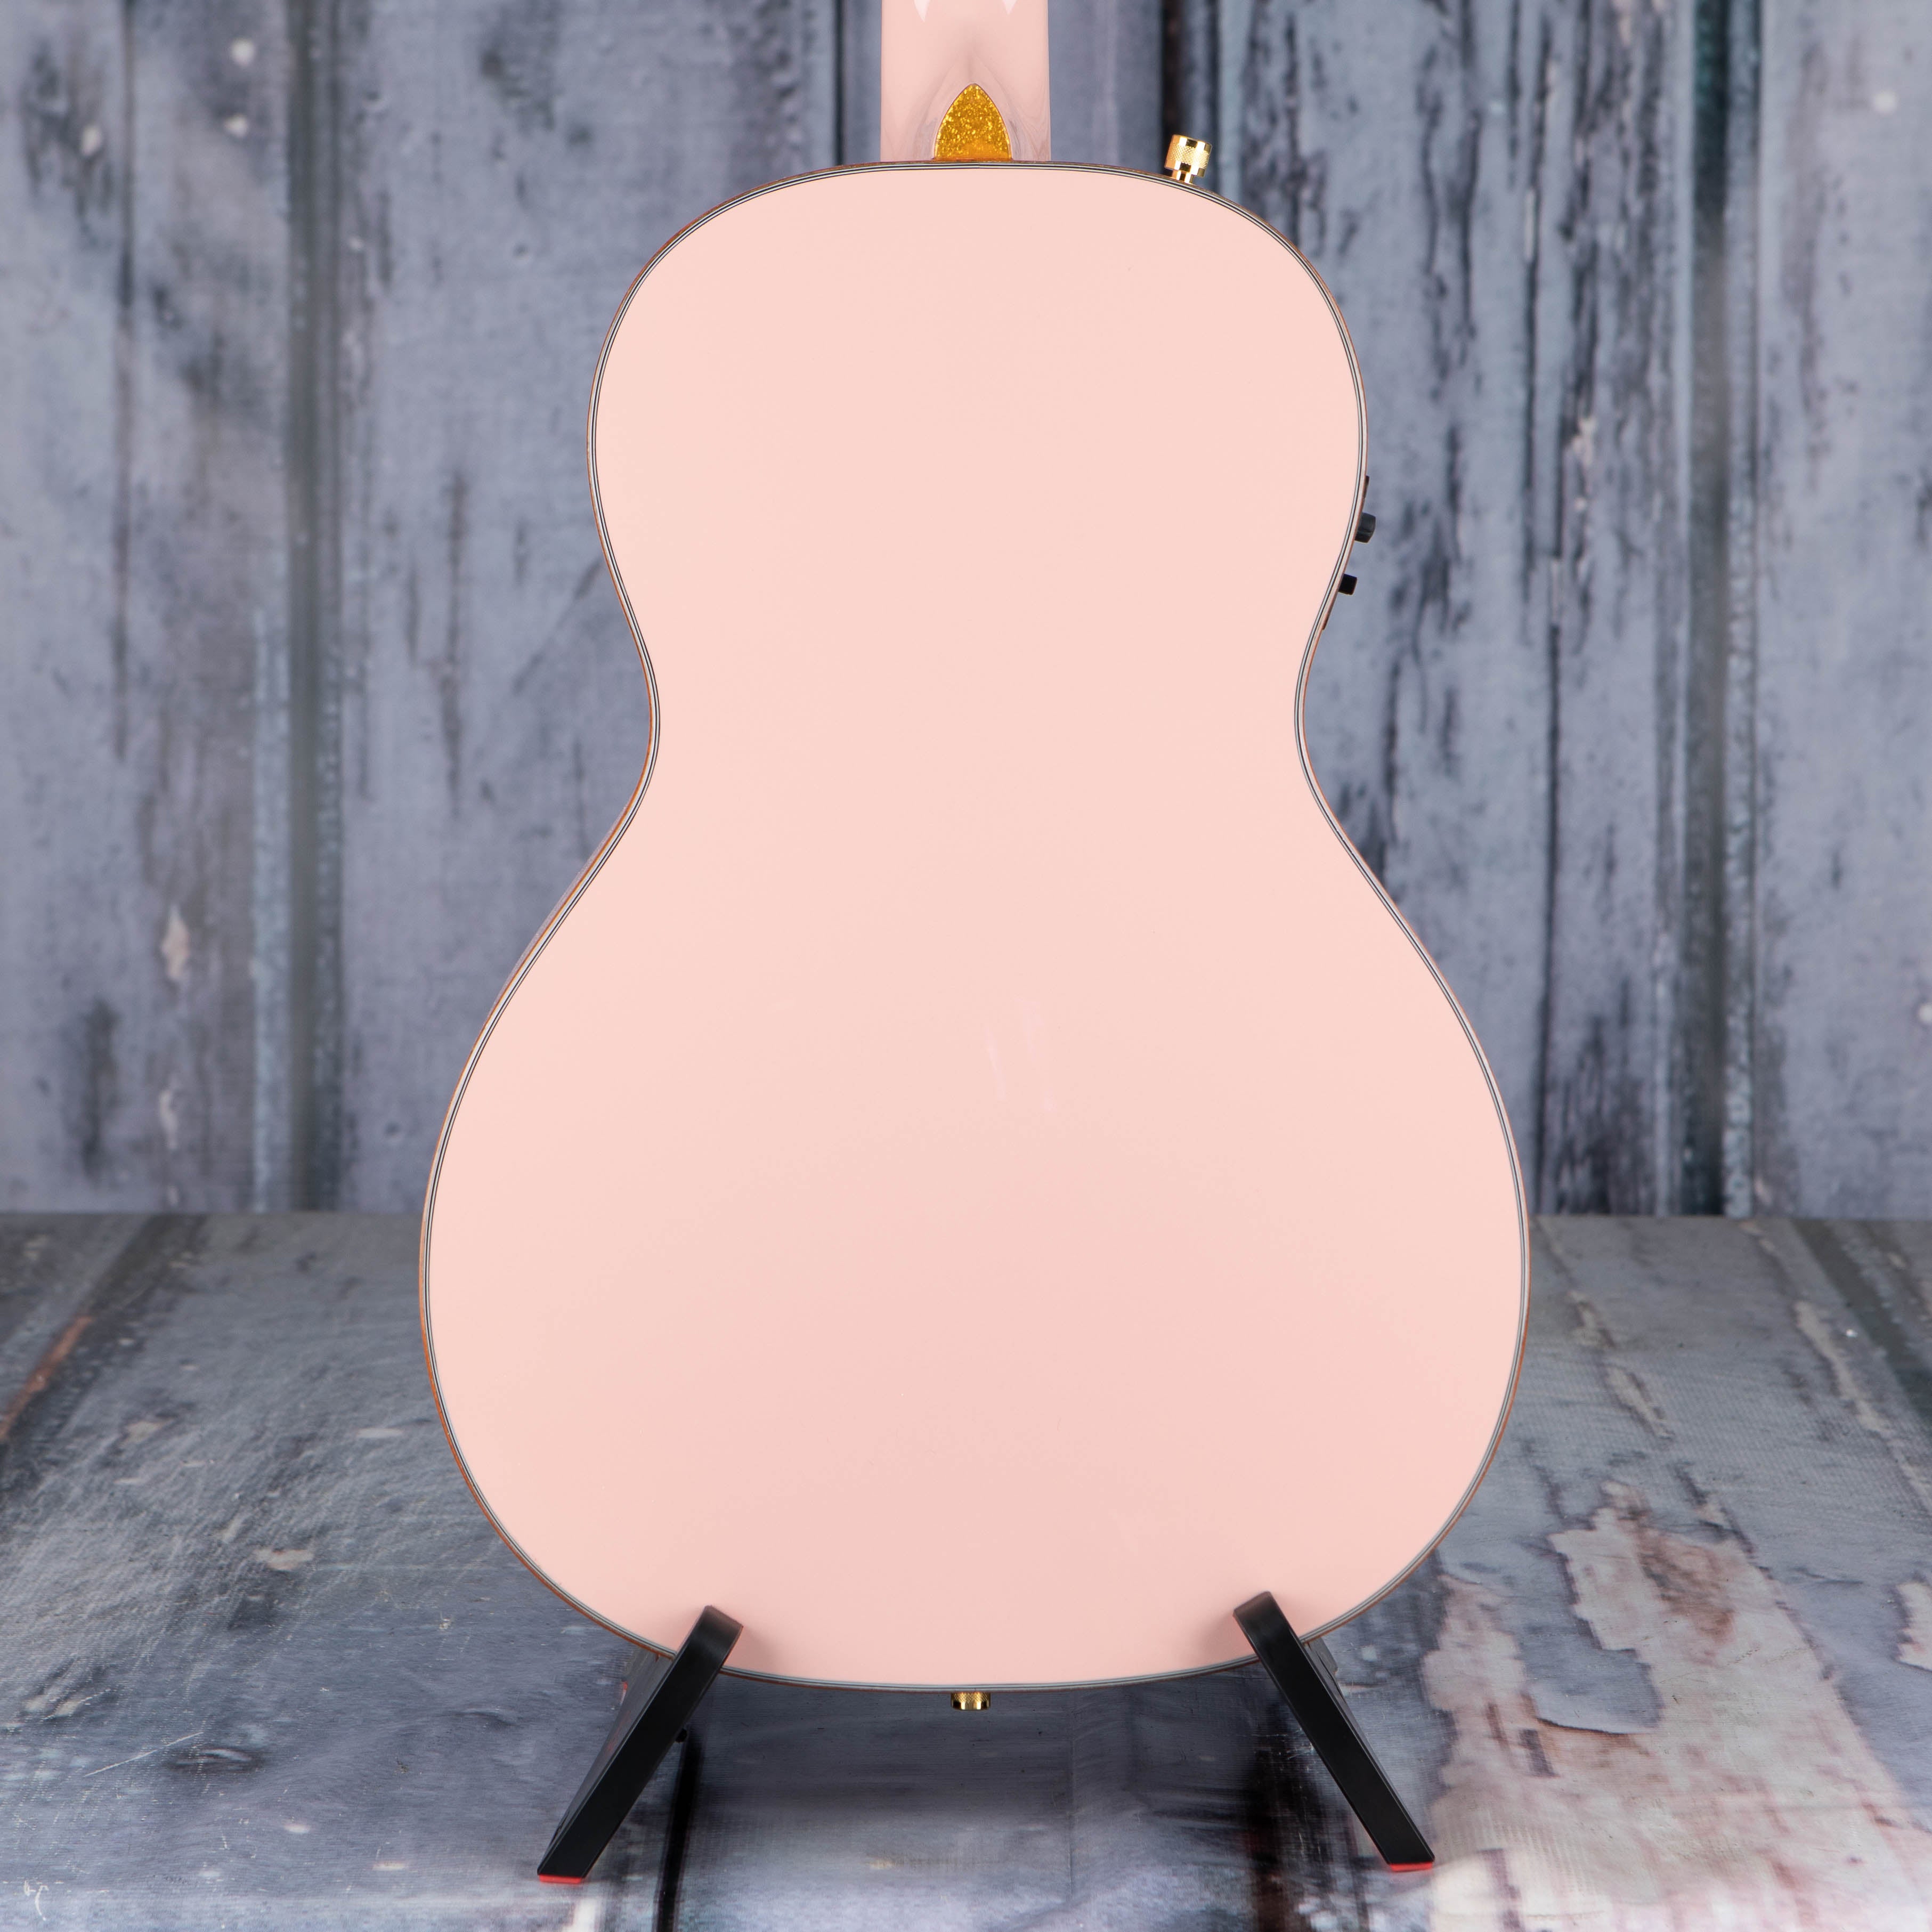 Gretsch G5021E Rancher Penguin Parlor Acoustic/Electric Guitar, Shell Pink, back closeup